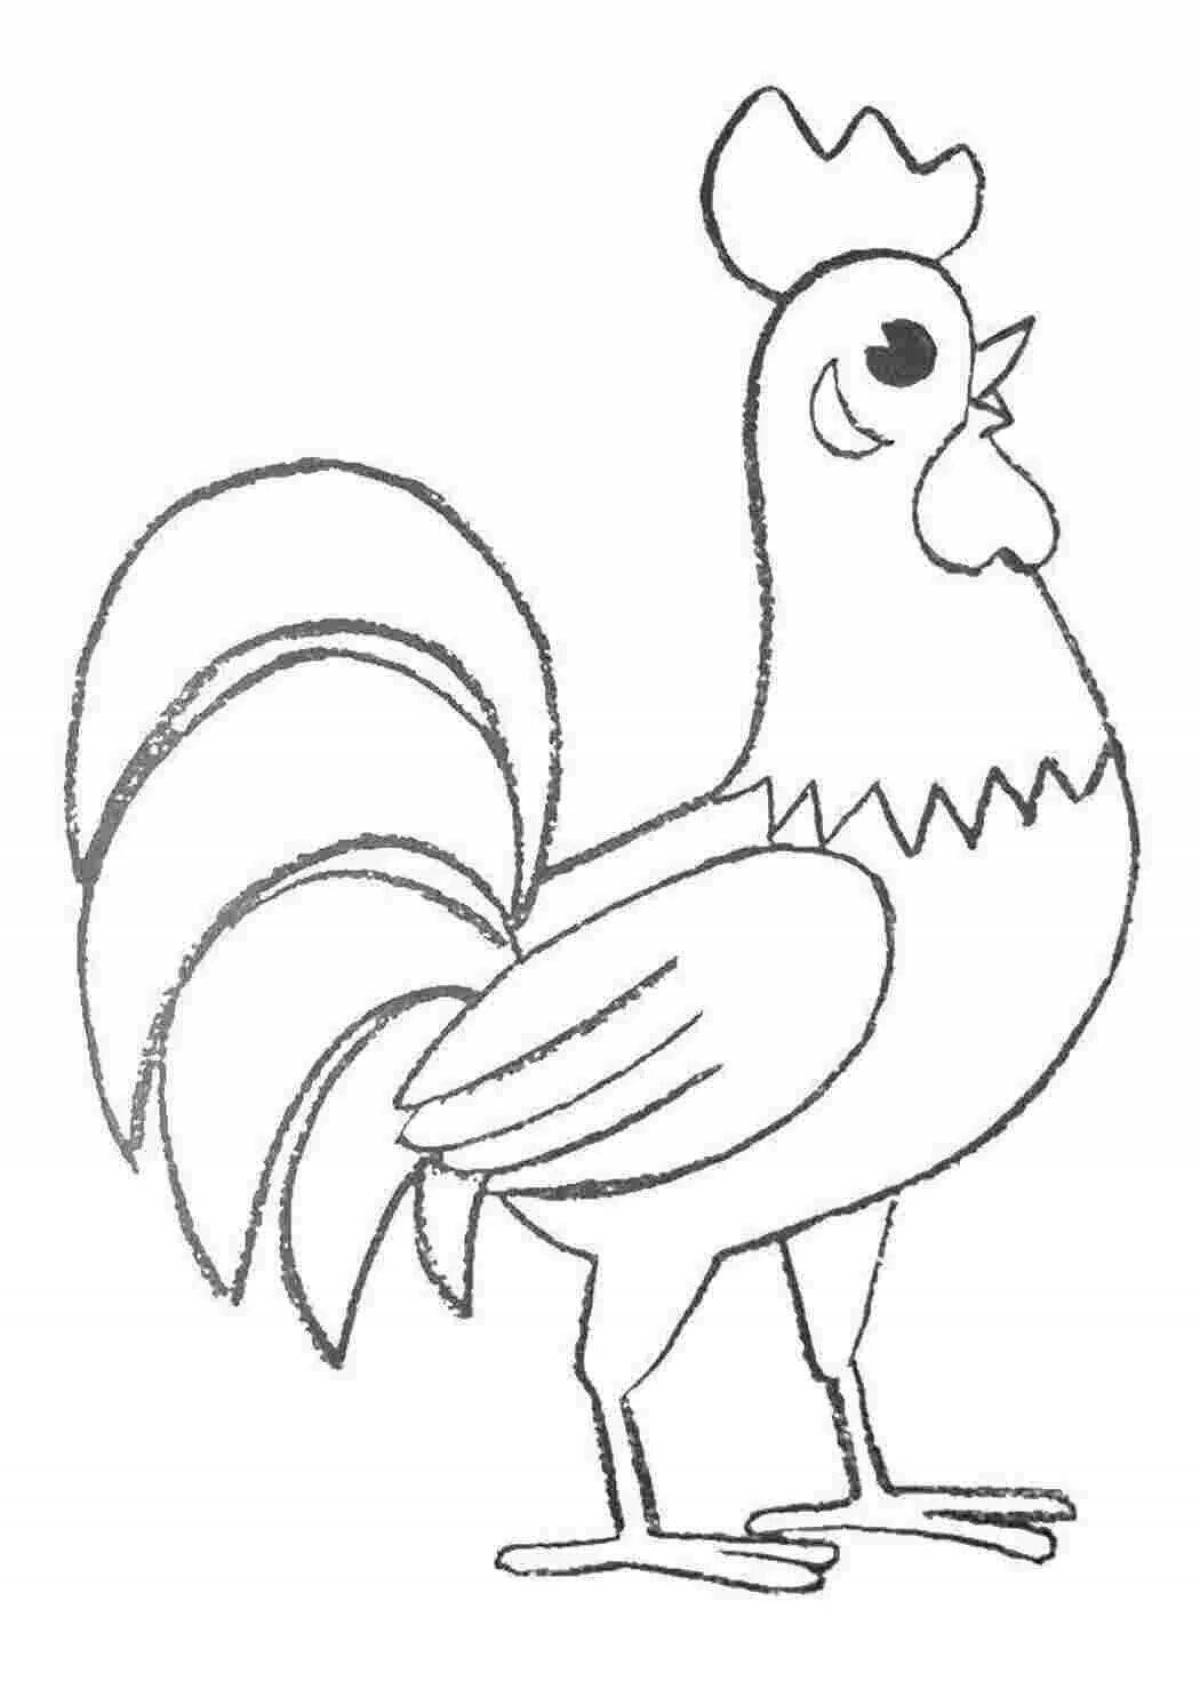 Balanced cockerel drawing